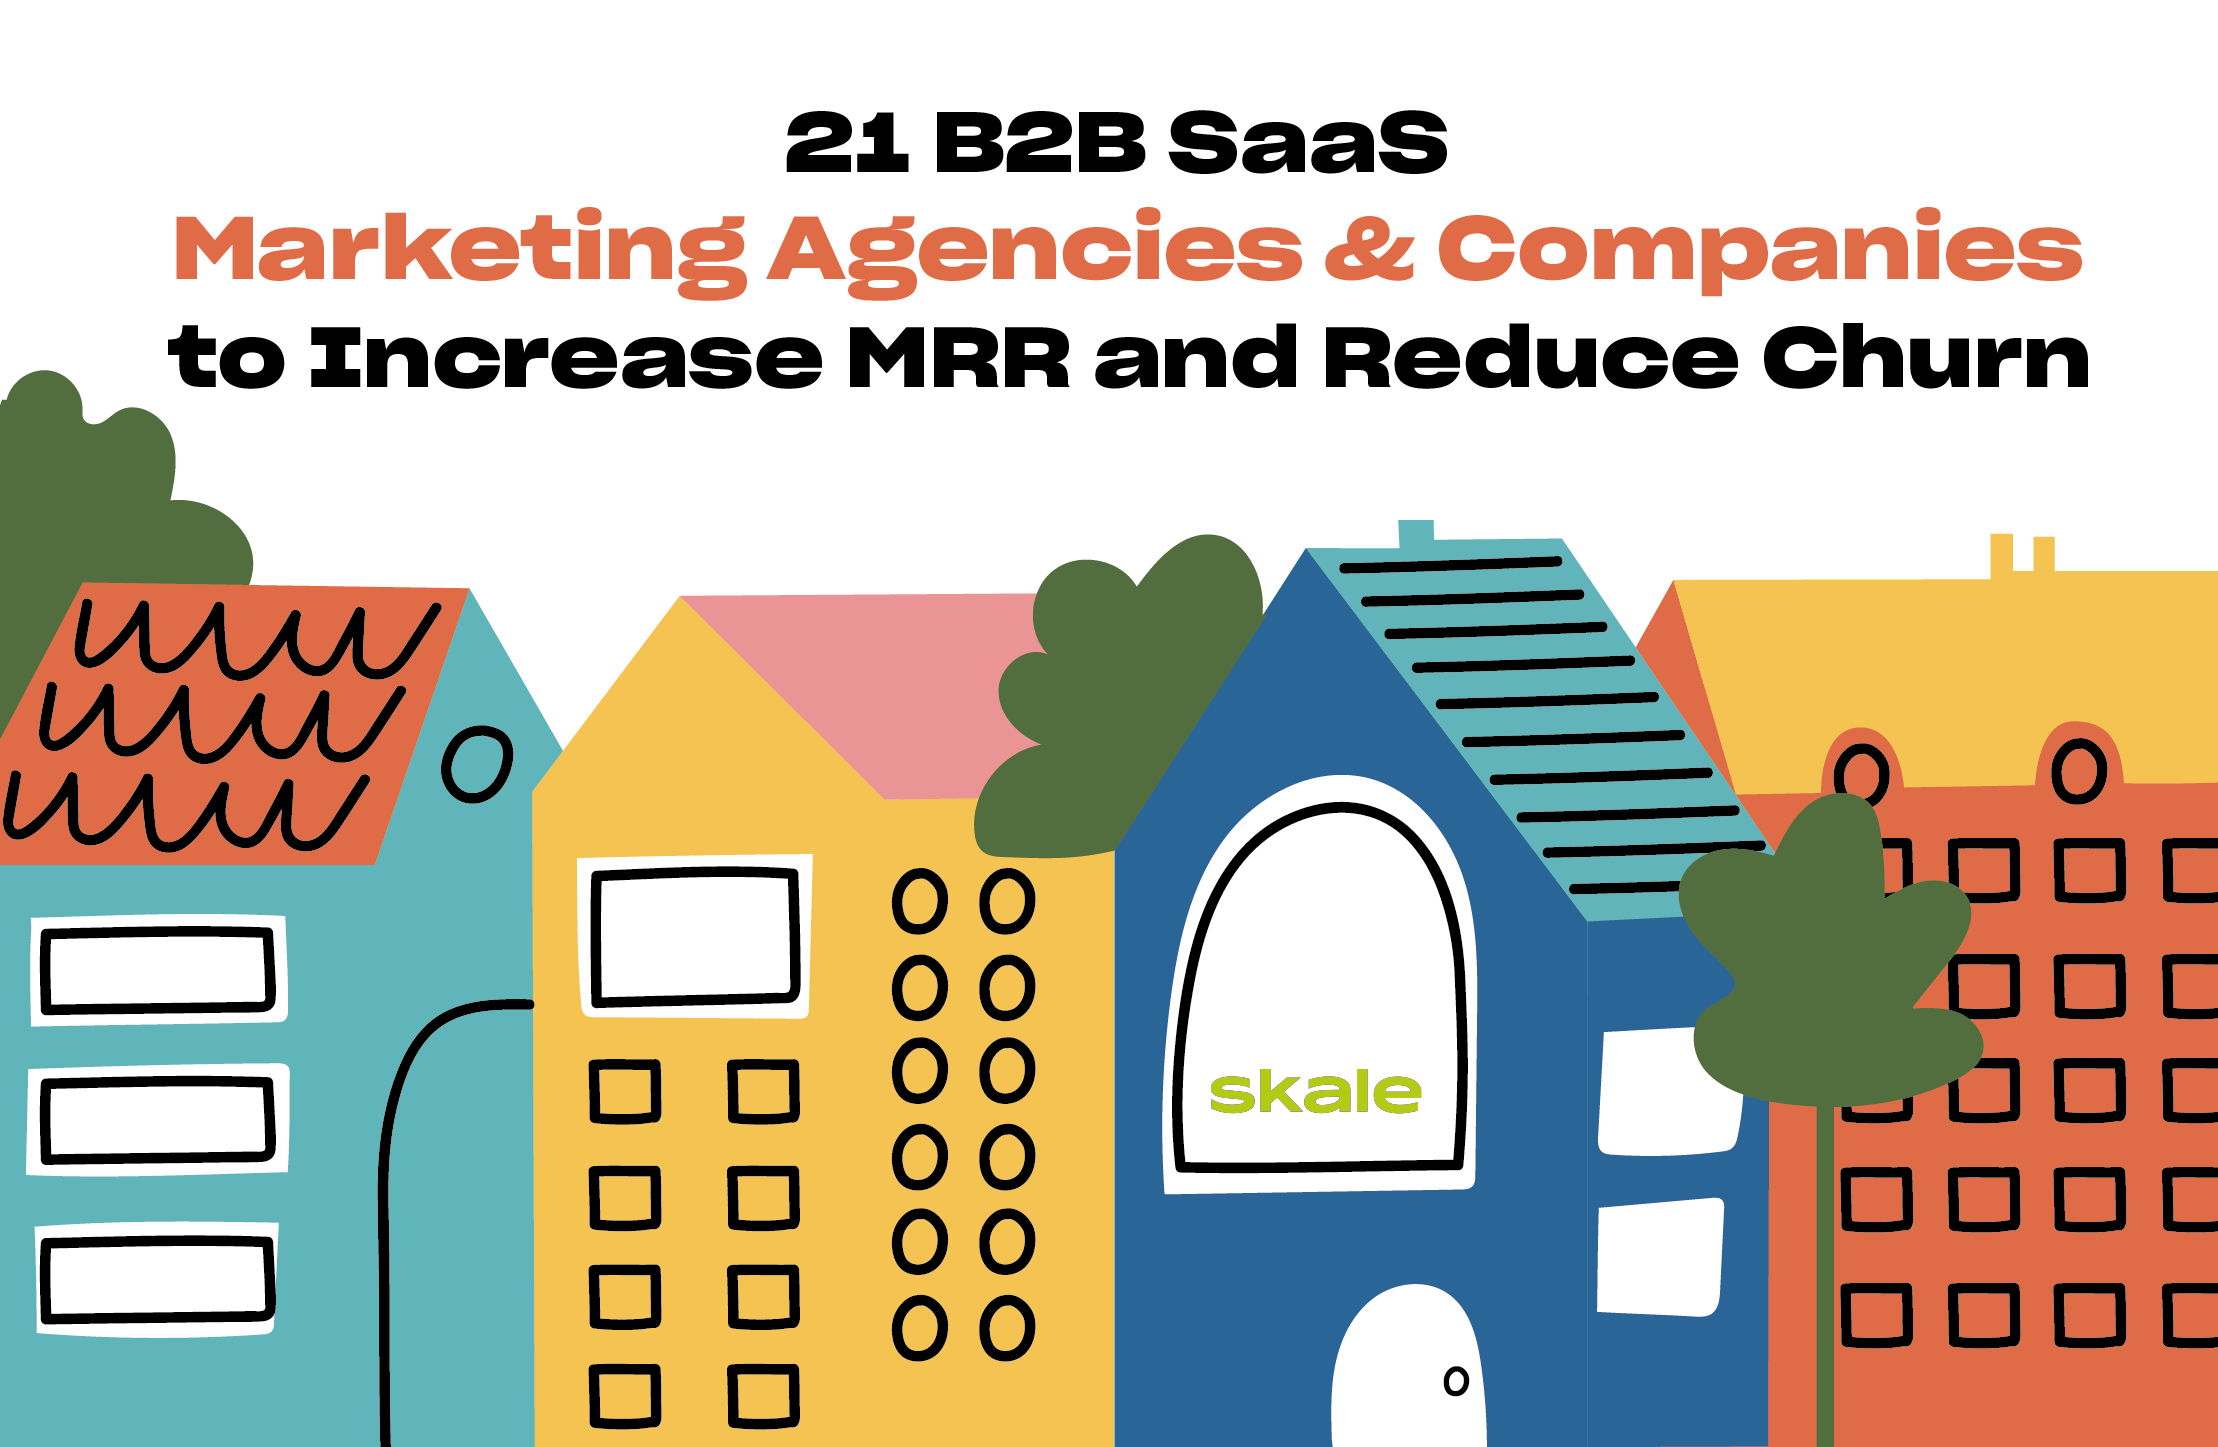 21 B2B SaaS Marketing Agencies & Companies to Increase MRR and Reduce Churn